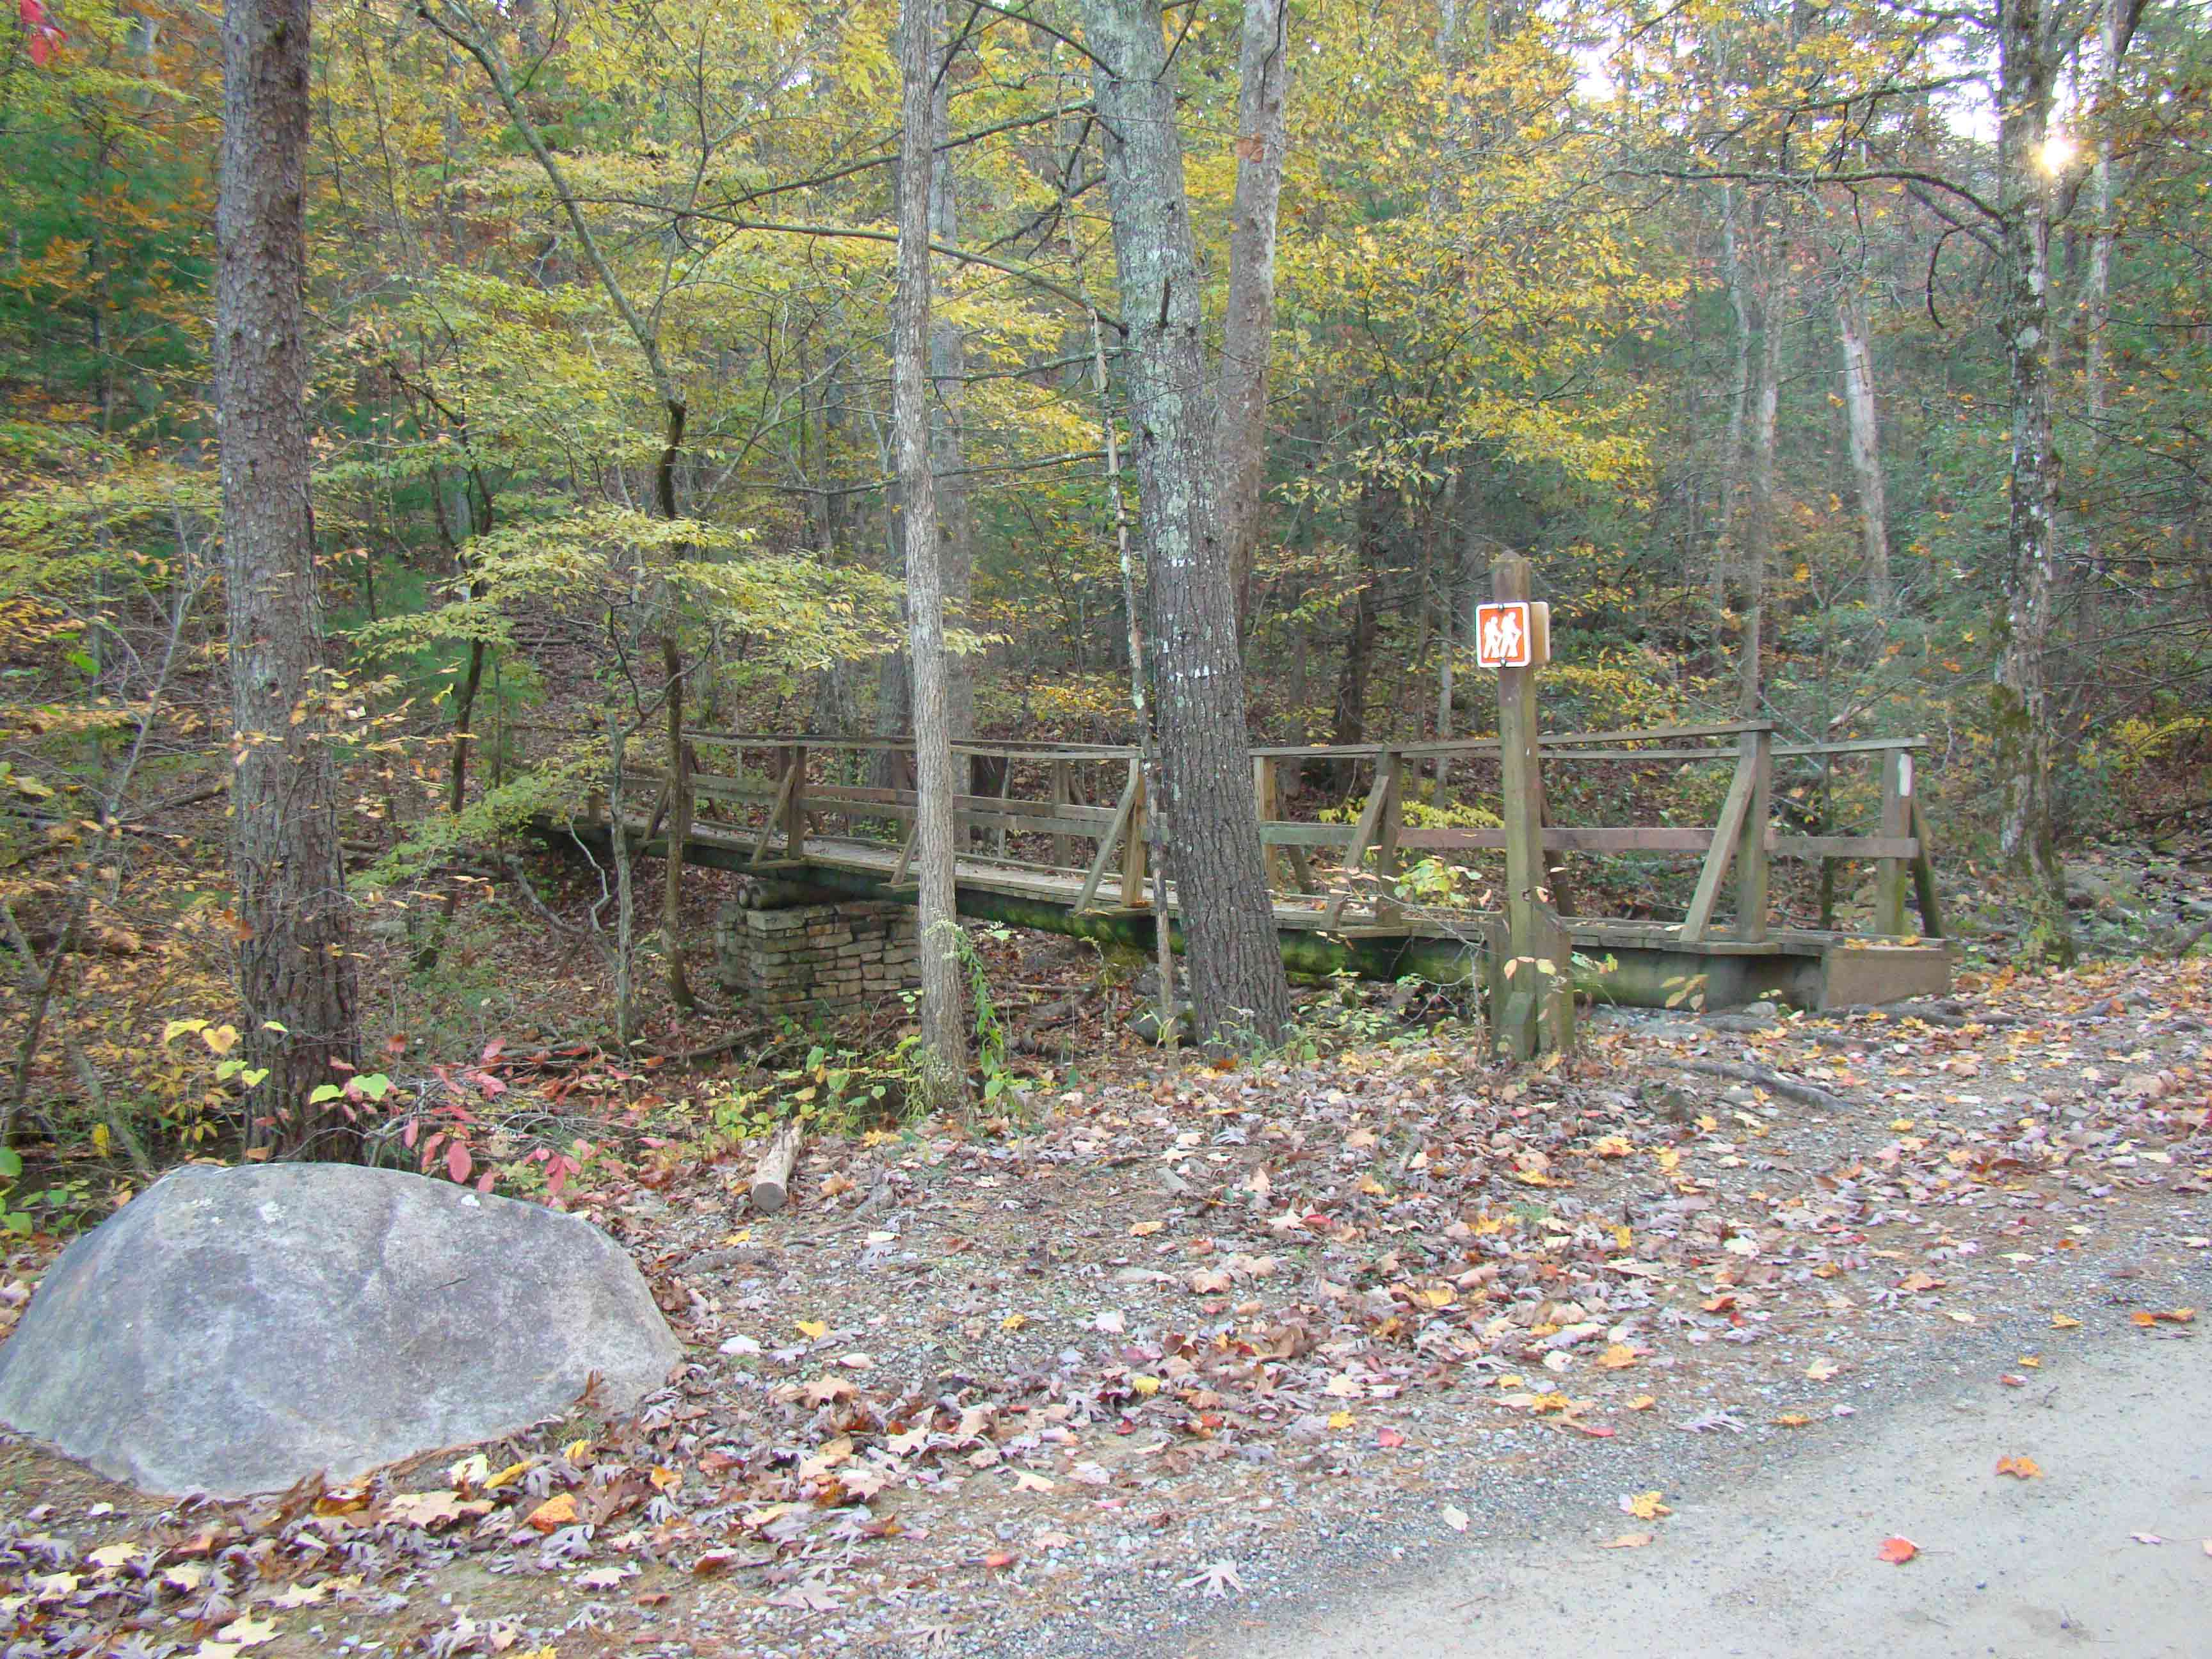 Wooden footbridge over Trout Creek at VA 620, mile 7.9
Courtesy ideanna656@aol.com